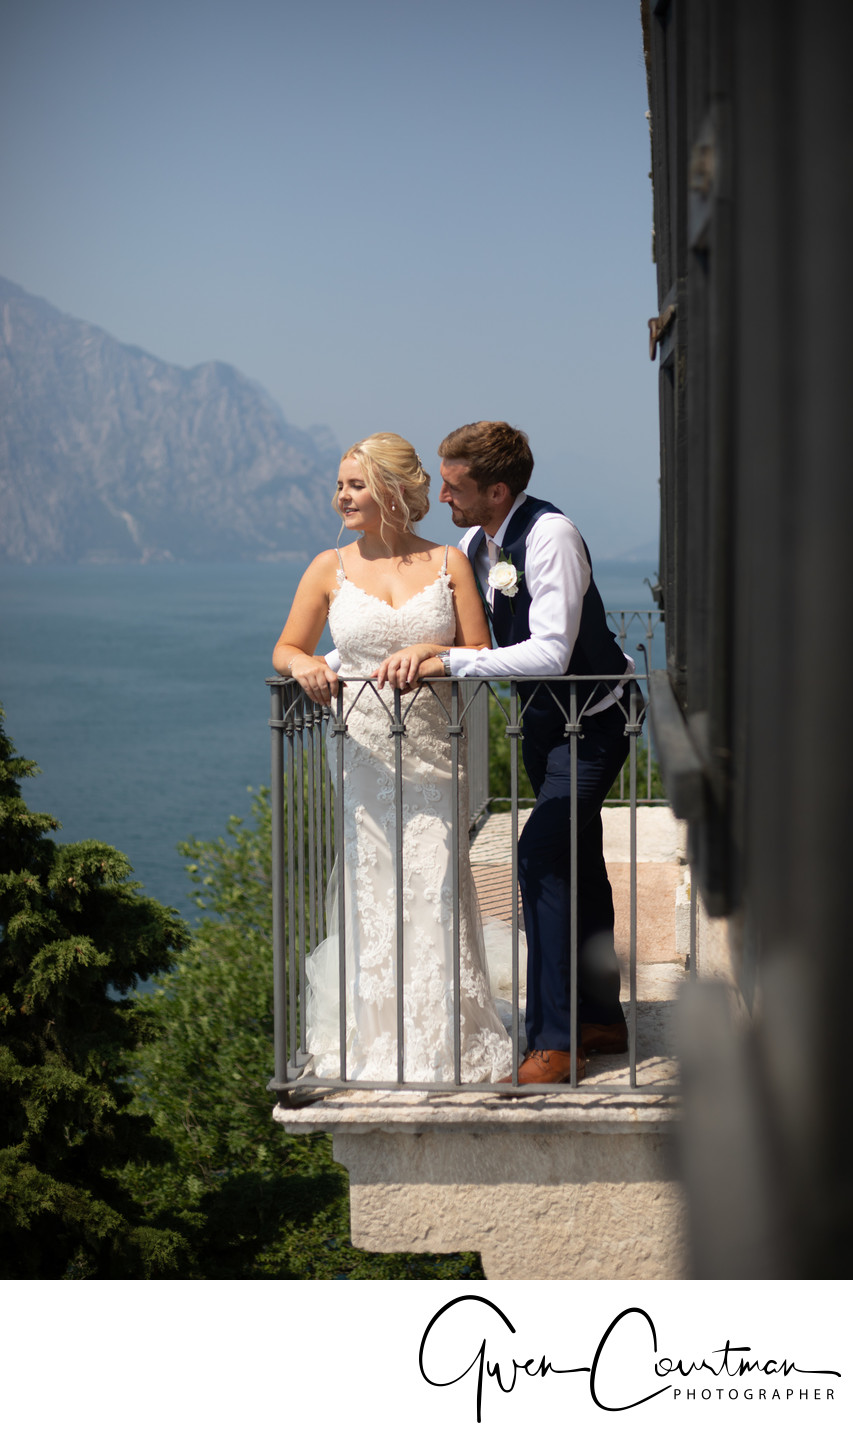 Sam & Steve, Stunning wedding in Italy.